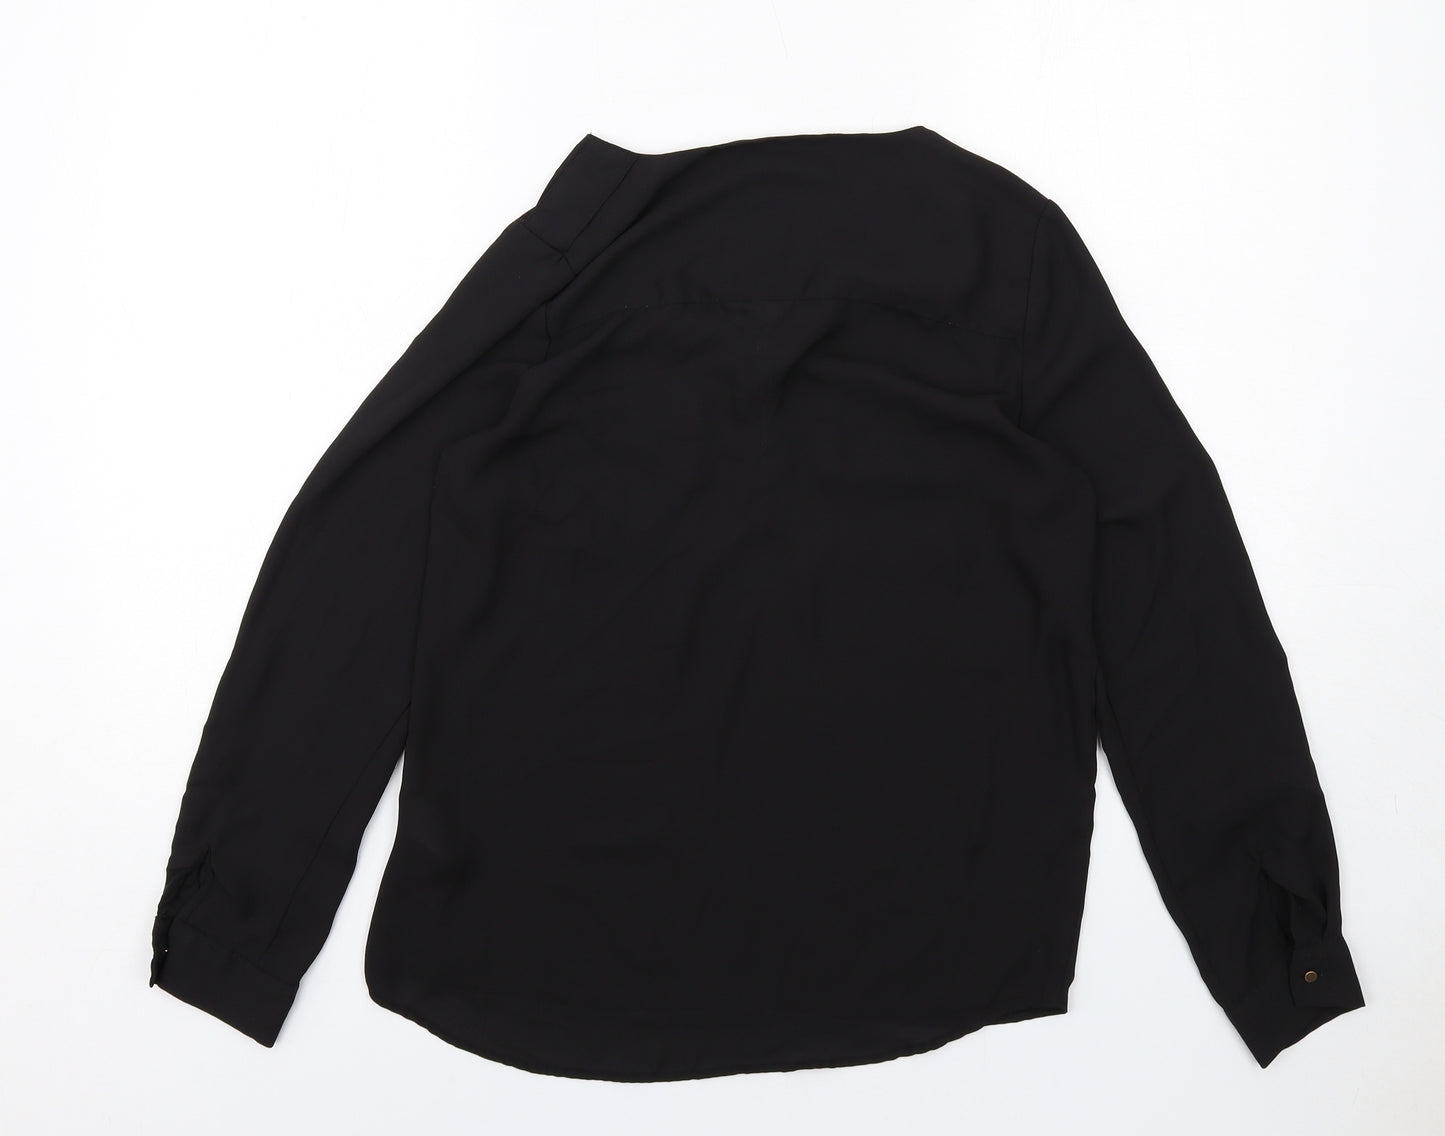 New Look Womens Black Polyester Basic Blouse Size 8 V-Neck